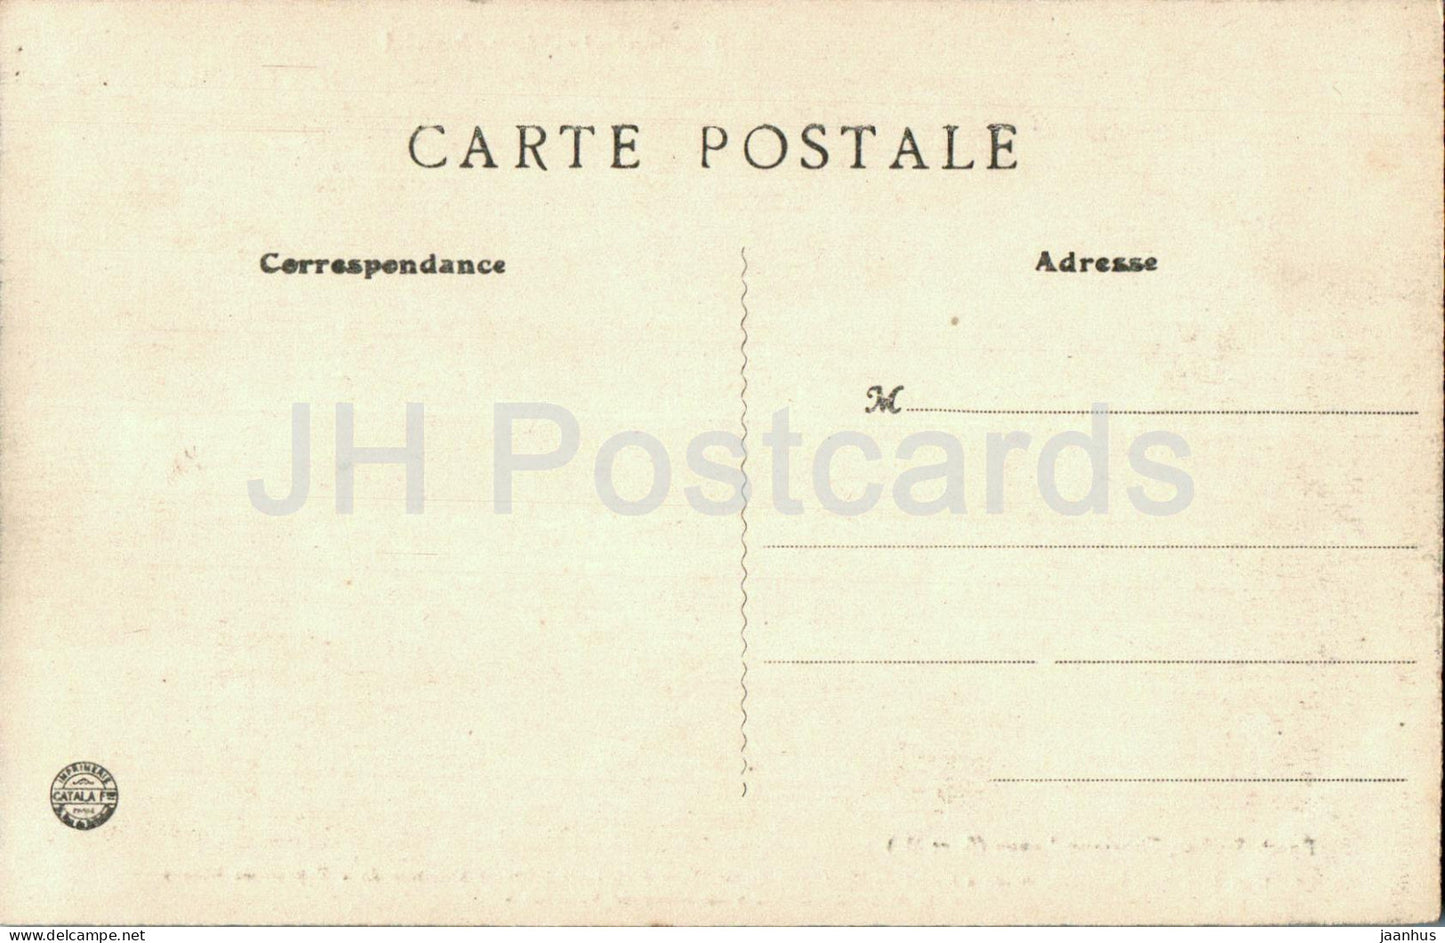 Sainte Menehould – Chambre historique de la Famille Royale – 8 – alte Postkarte – Frankreich – unbenutzt 